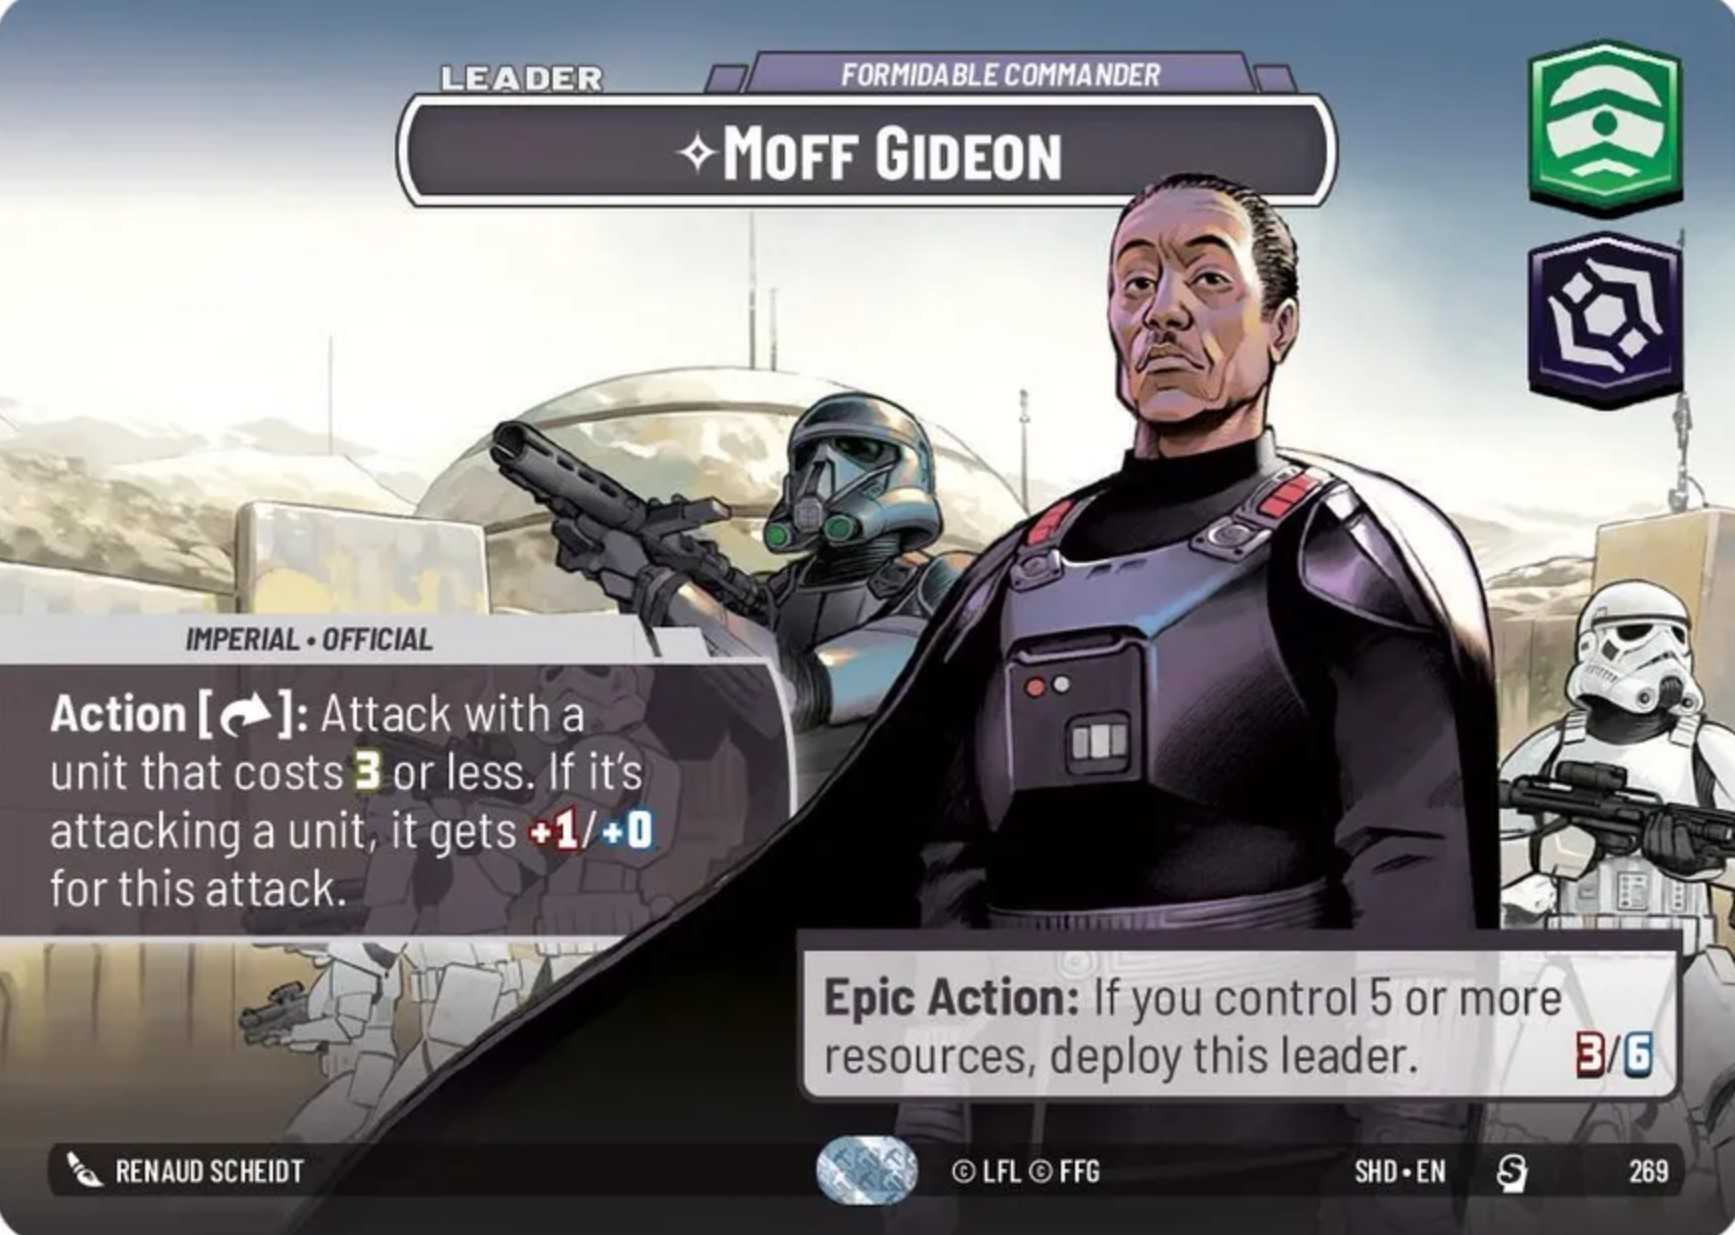 Moff Gideon Showcase card in Star Wars Unlimited